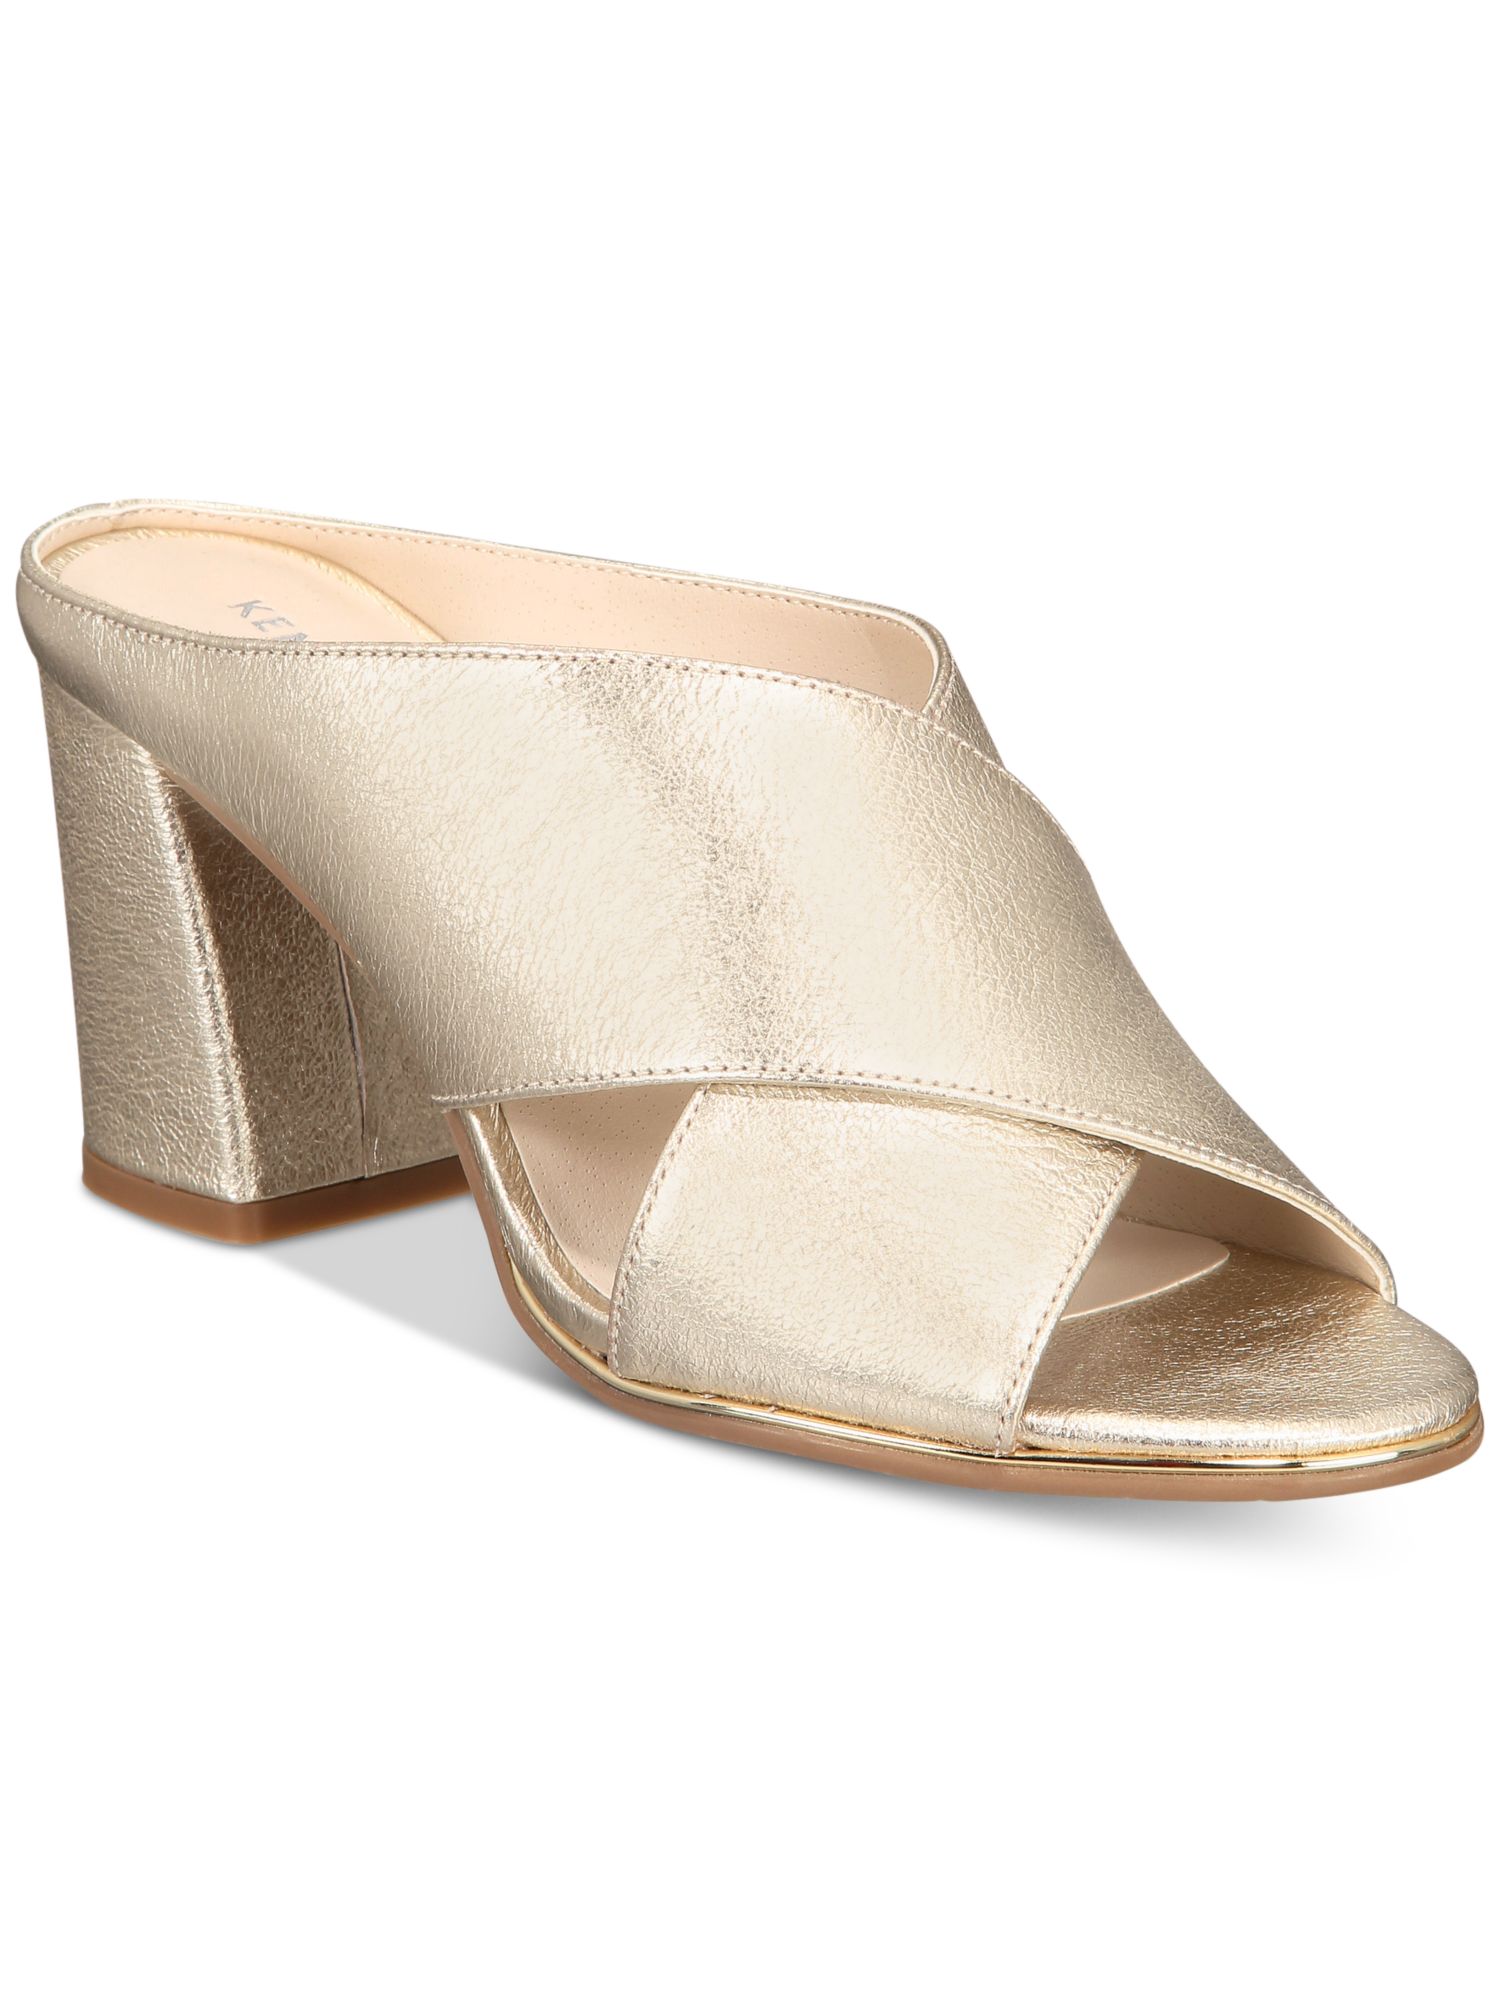 KAS NEW YORK Womens Gold Wide Crisscross Straps Lyra Round Toe Block Heel Slip On Leather Slide Sandals Shoes 6 M